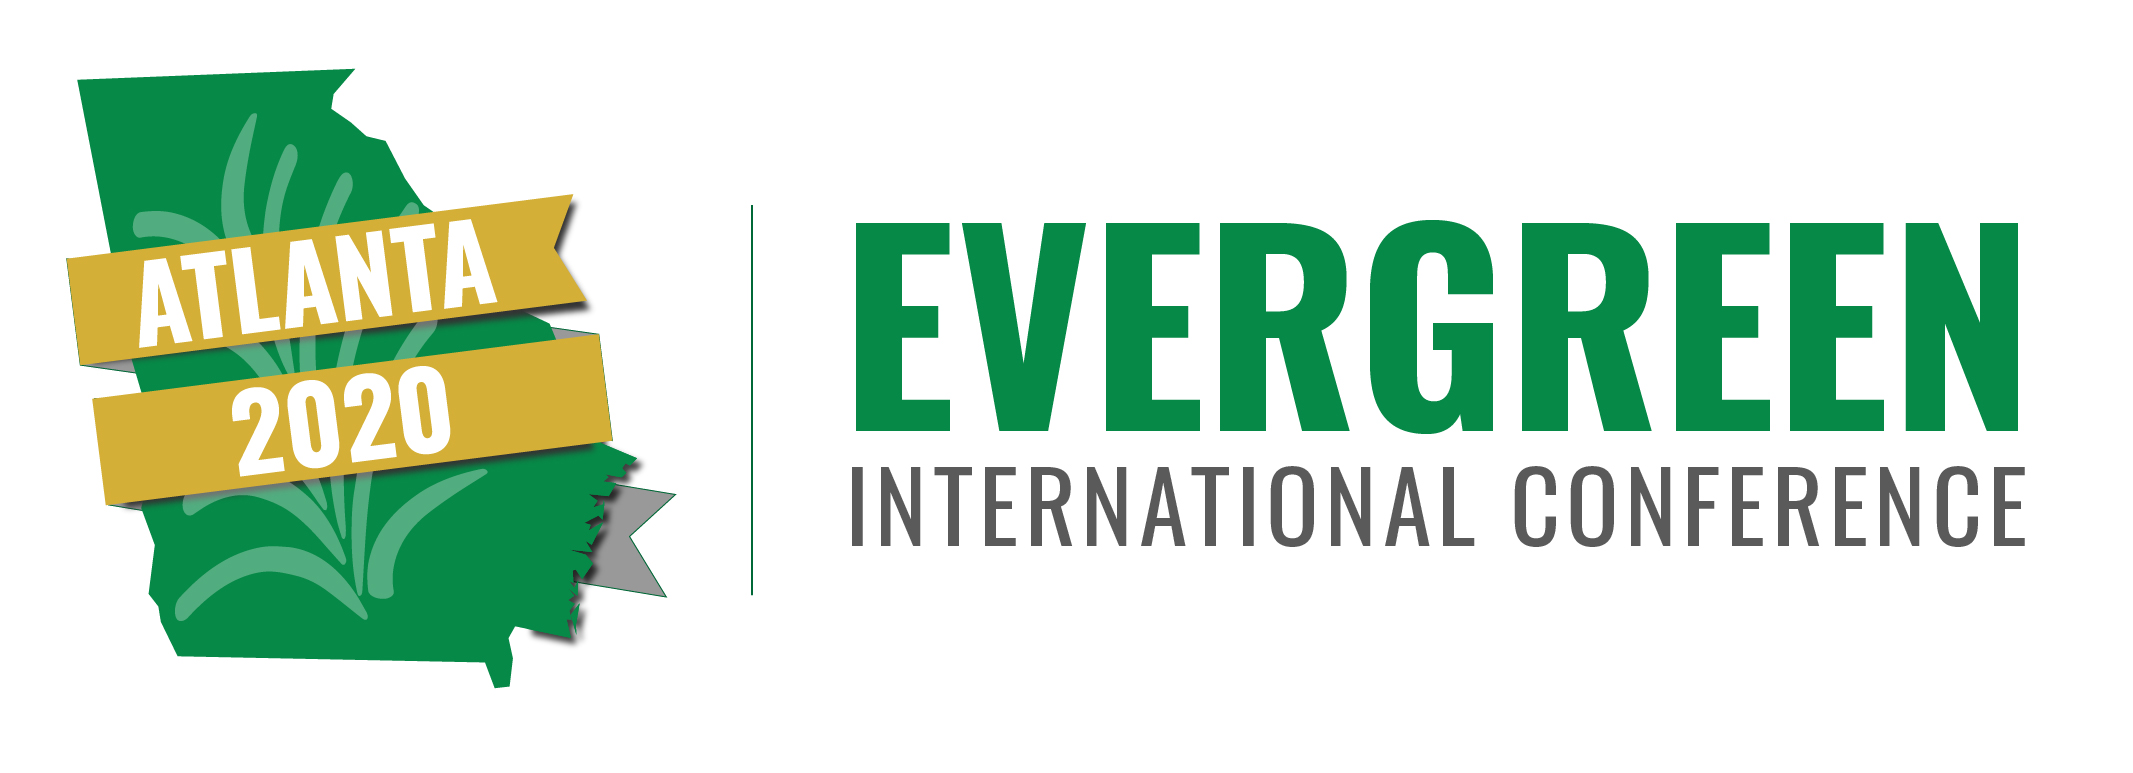 Evergreen International Conference 2020